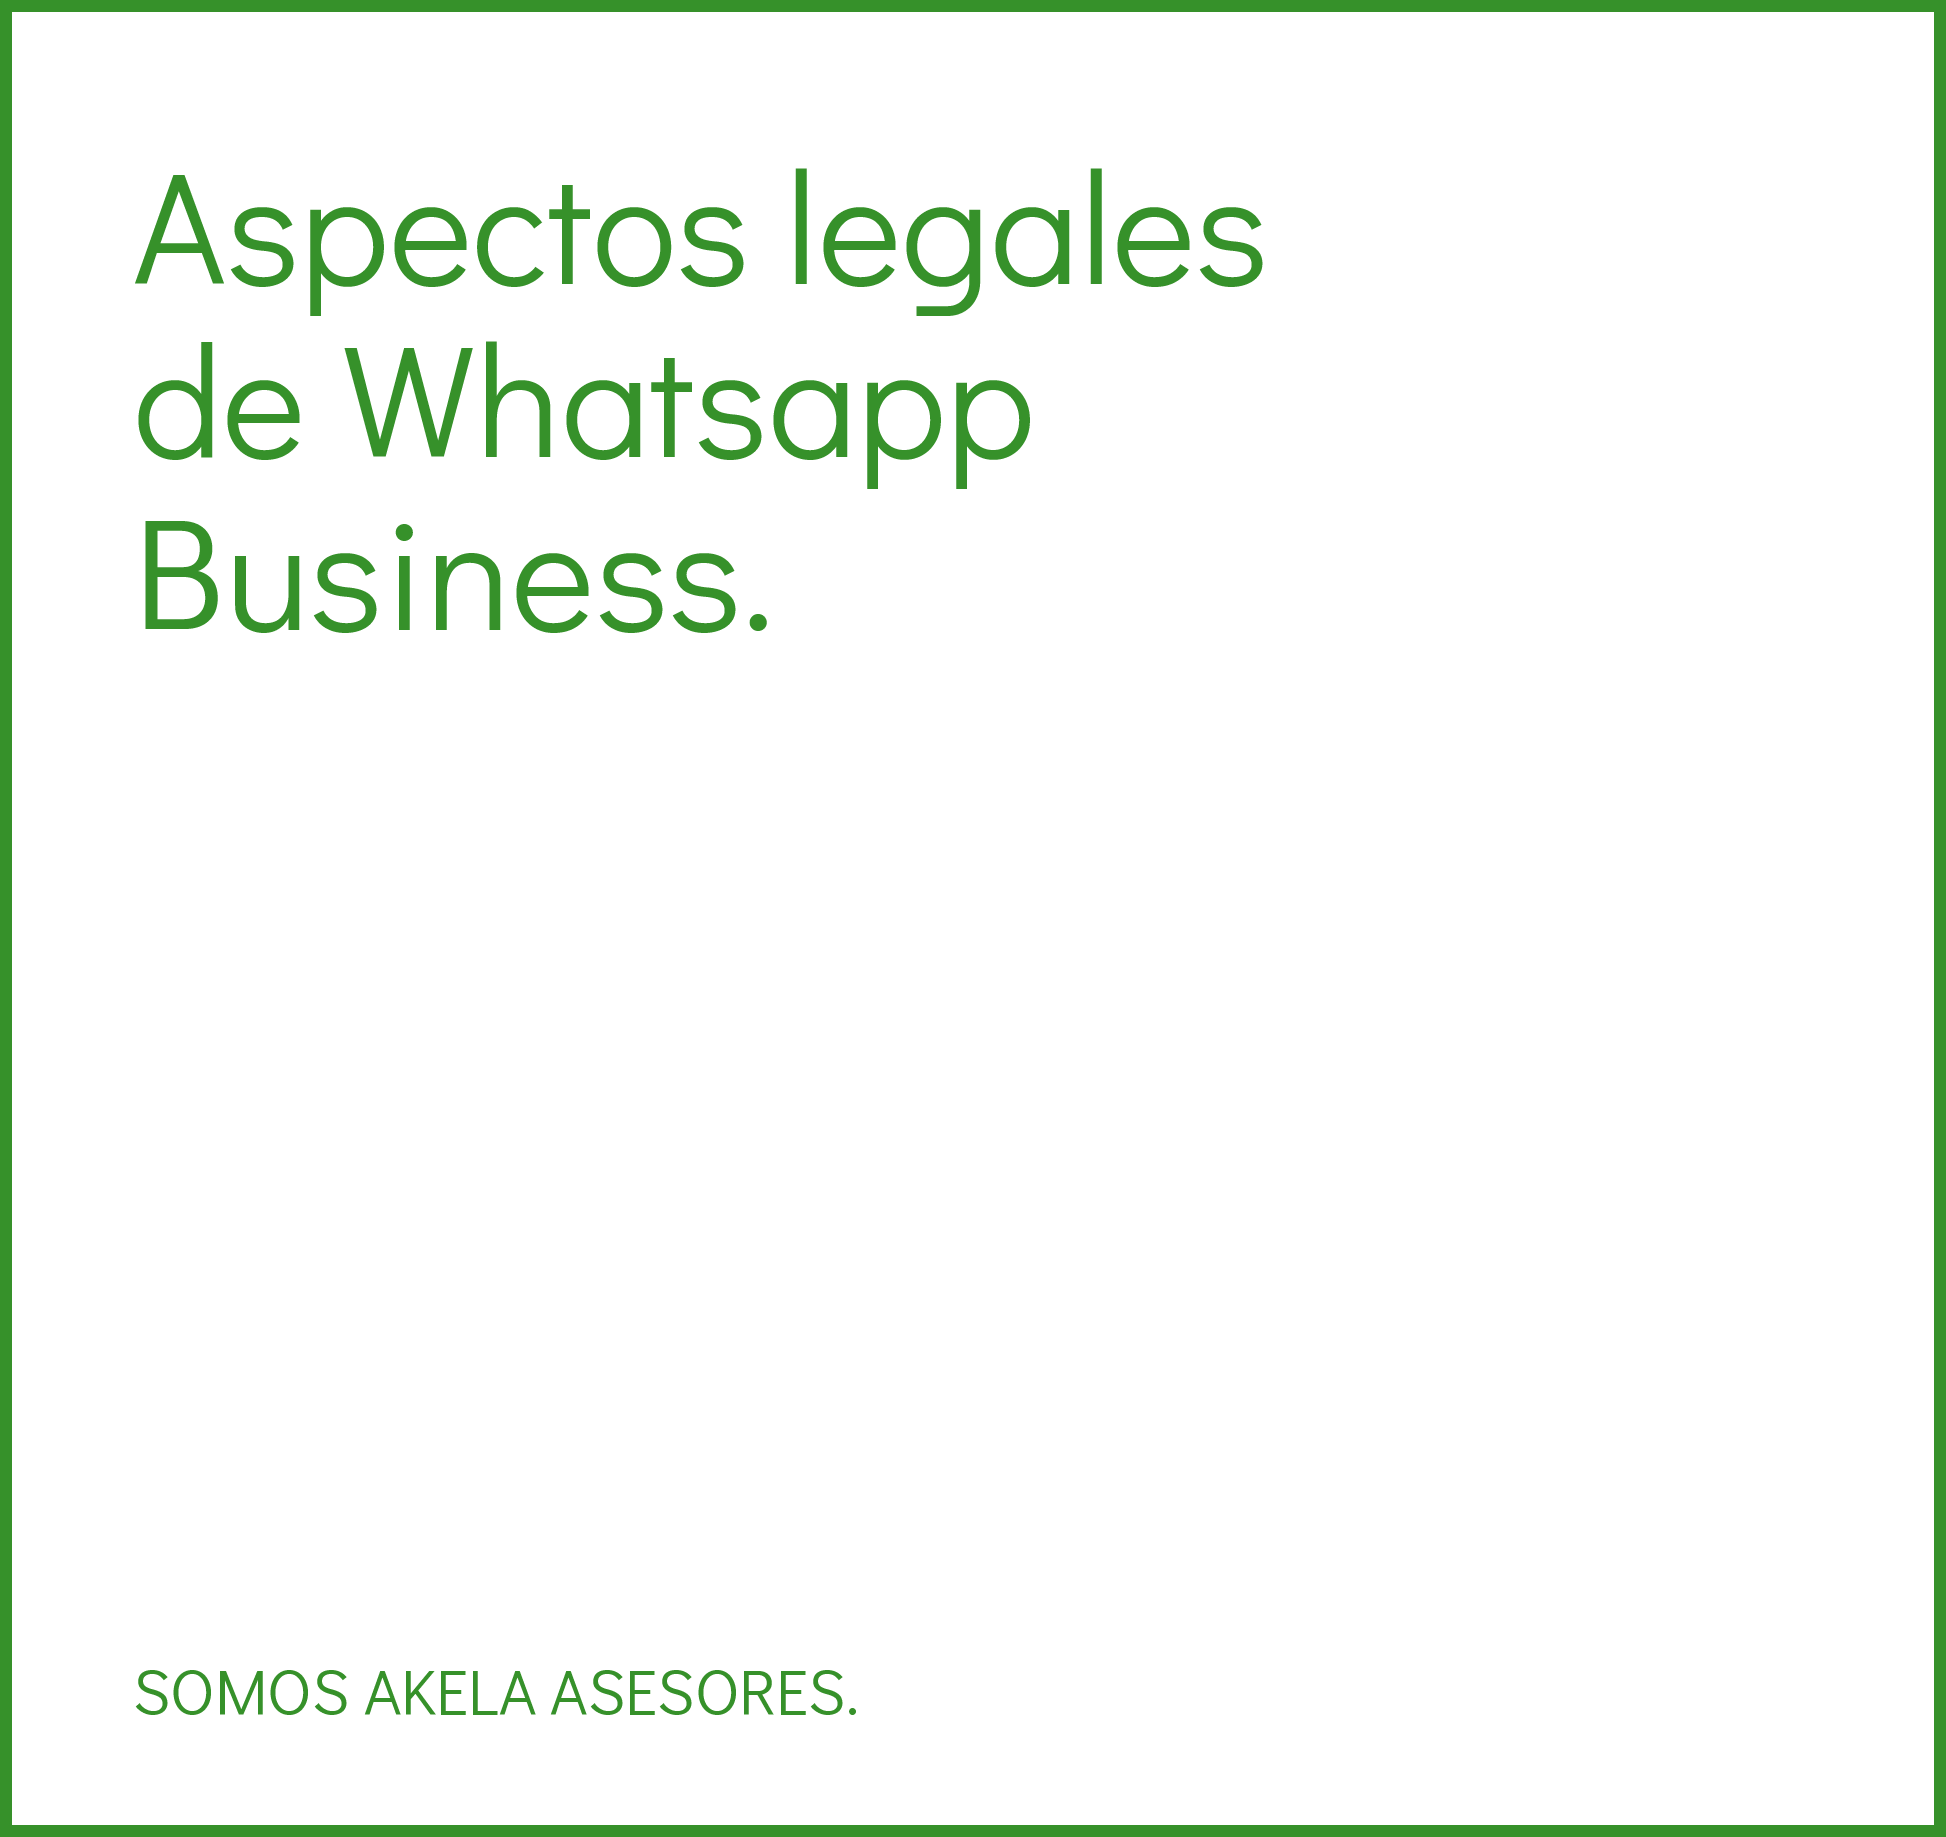 En este momento estás viendo Aspectos legales de Whatsapp Business